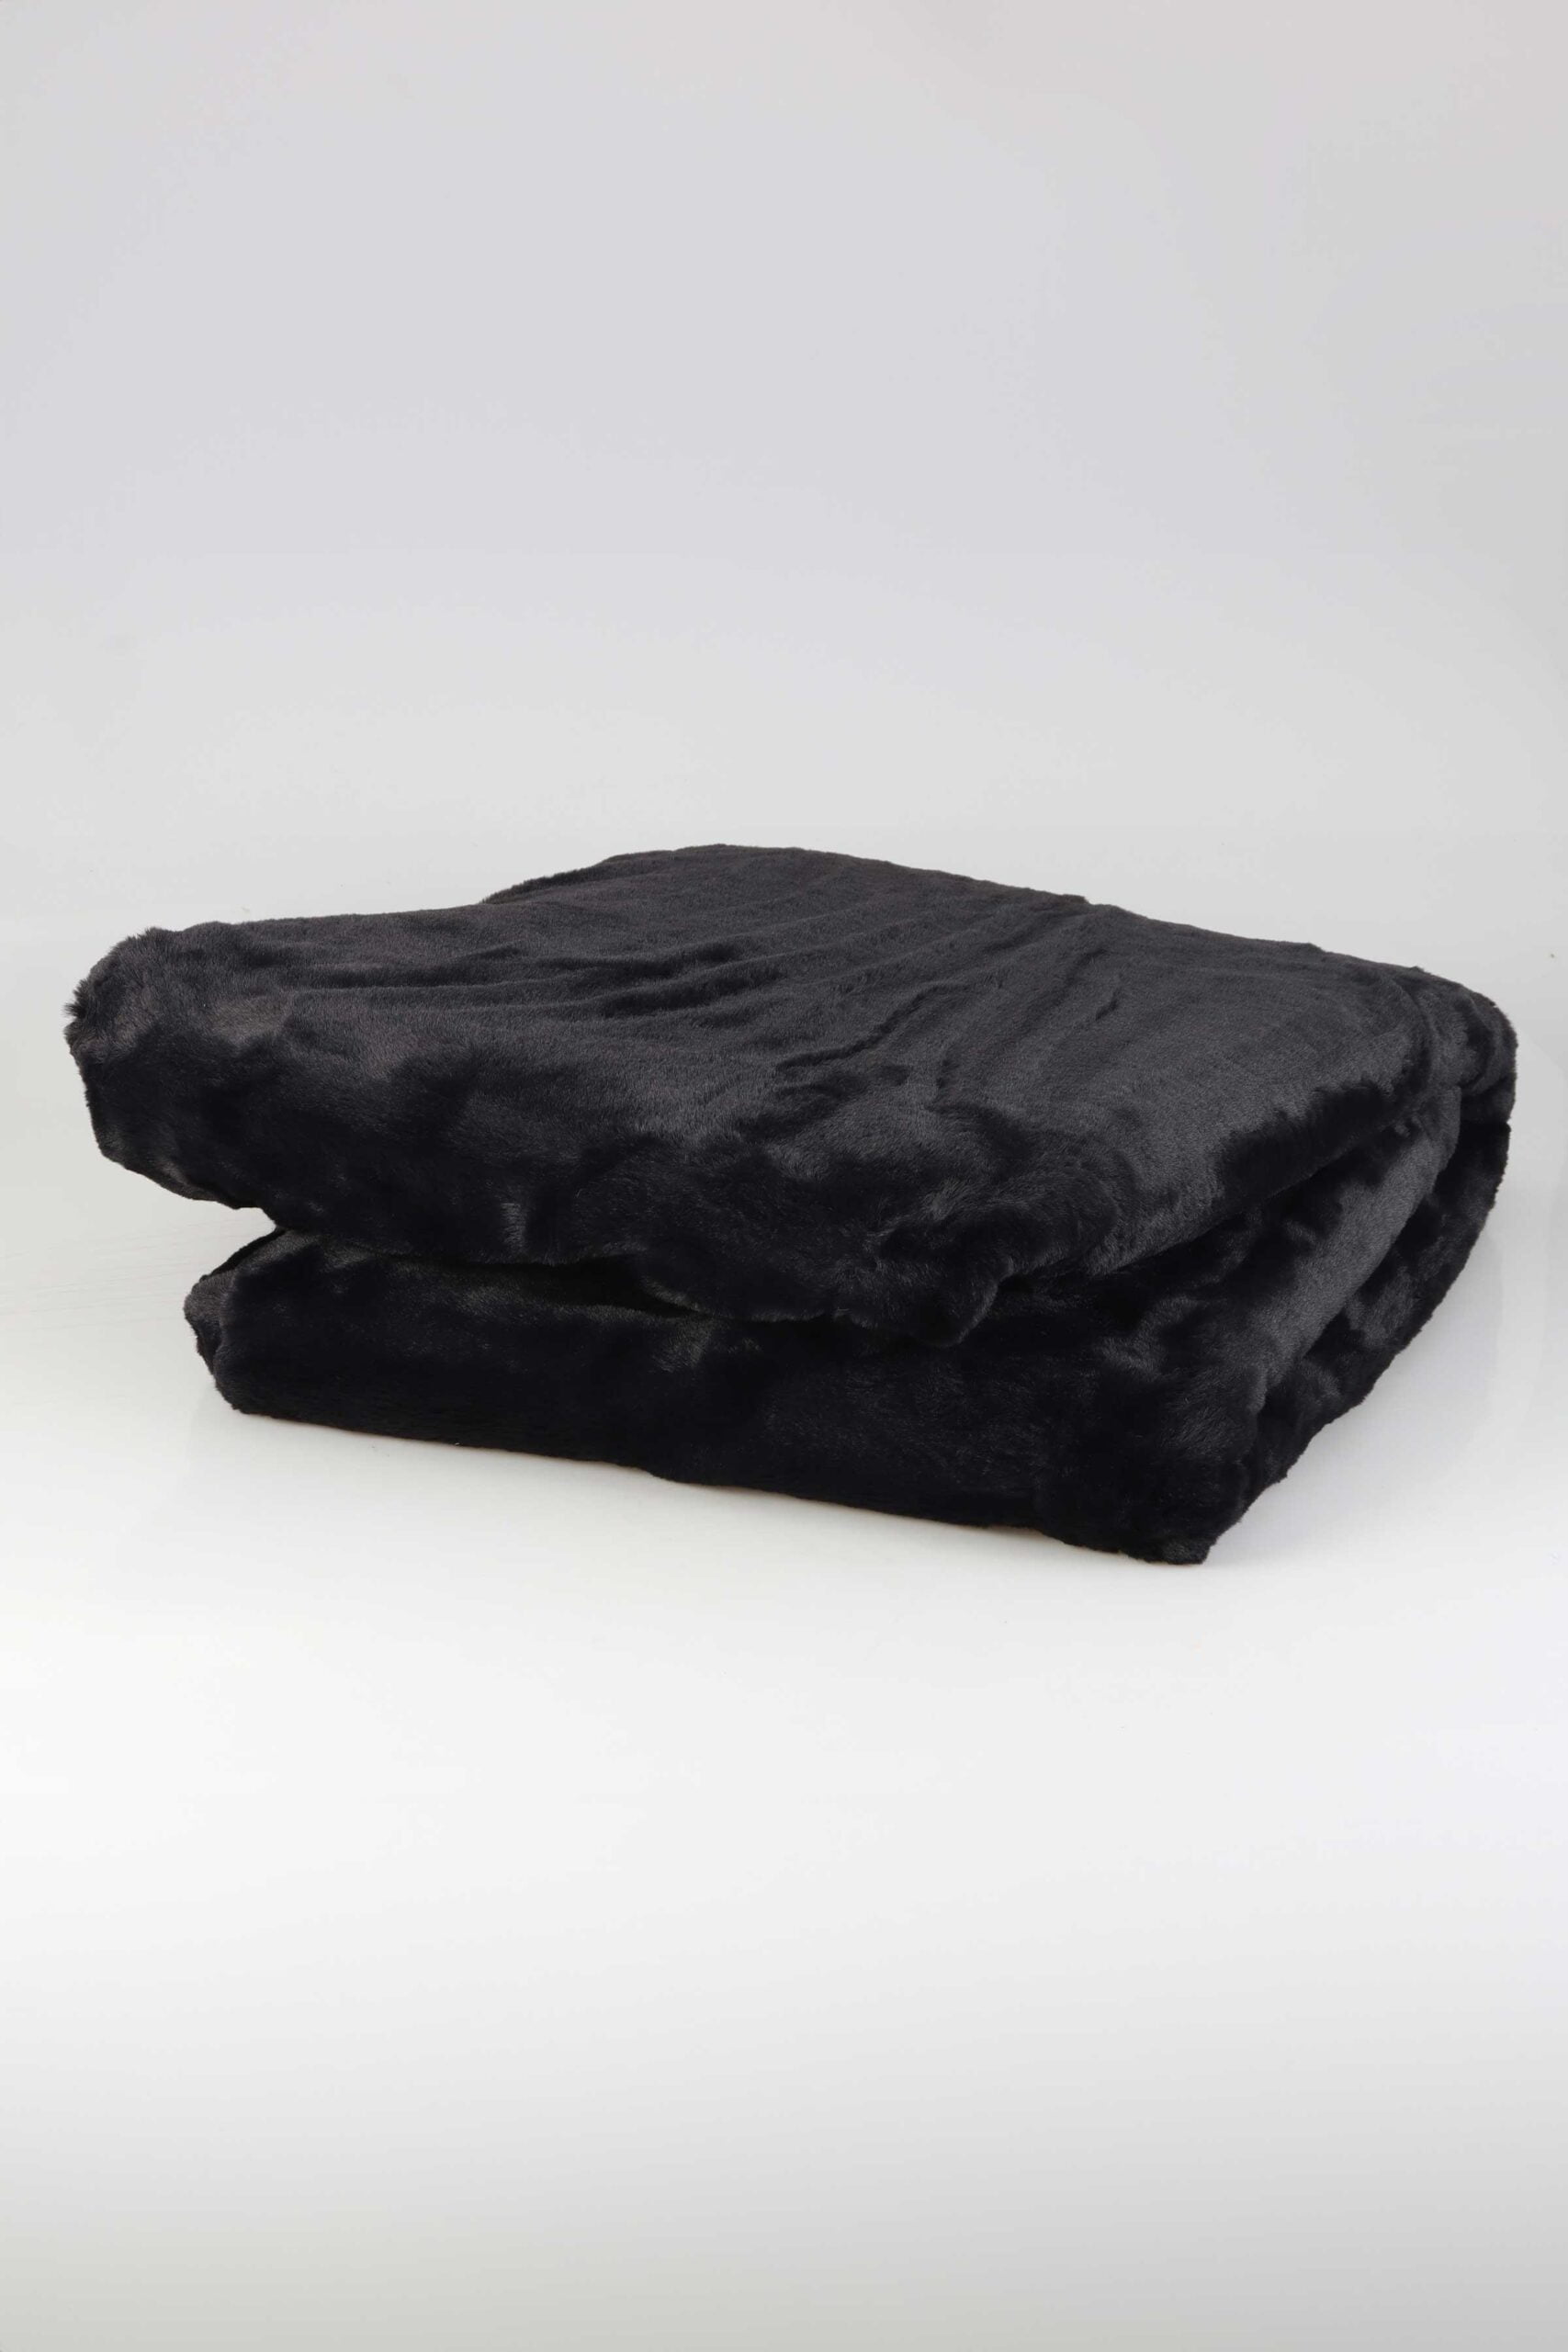 merinos luxe yatak ortusu siyah 150x200 cm 119599.jpg